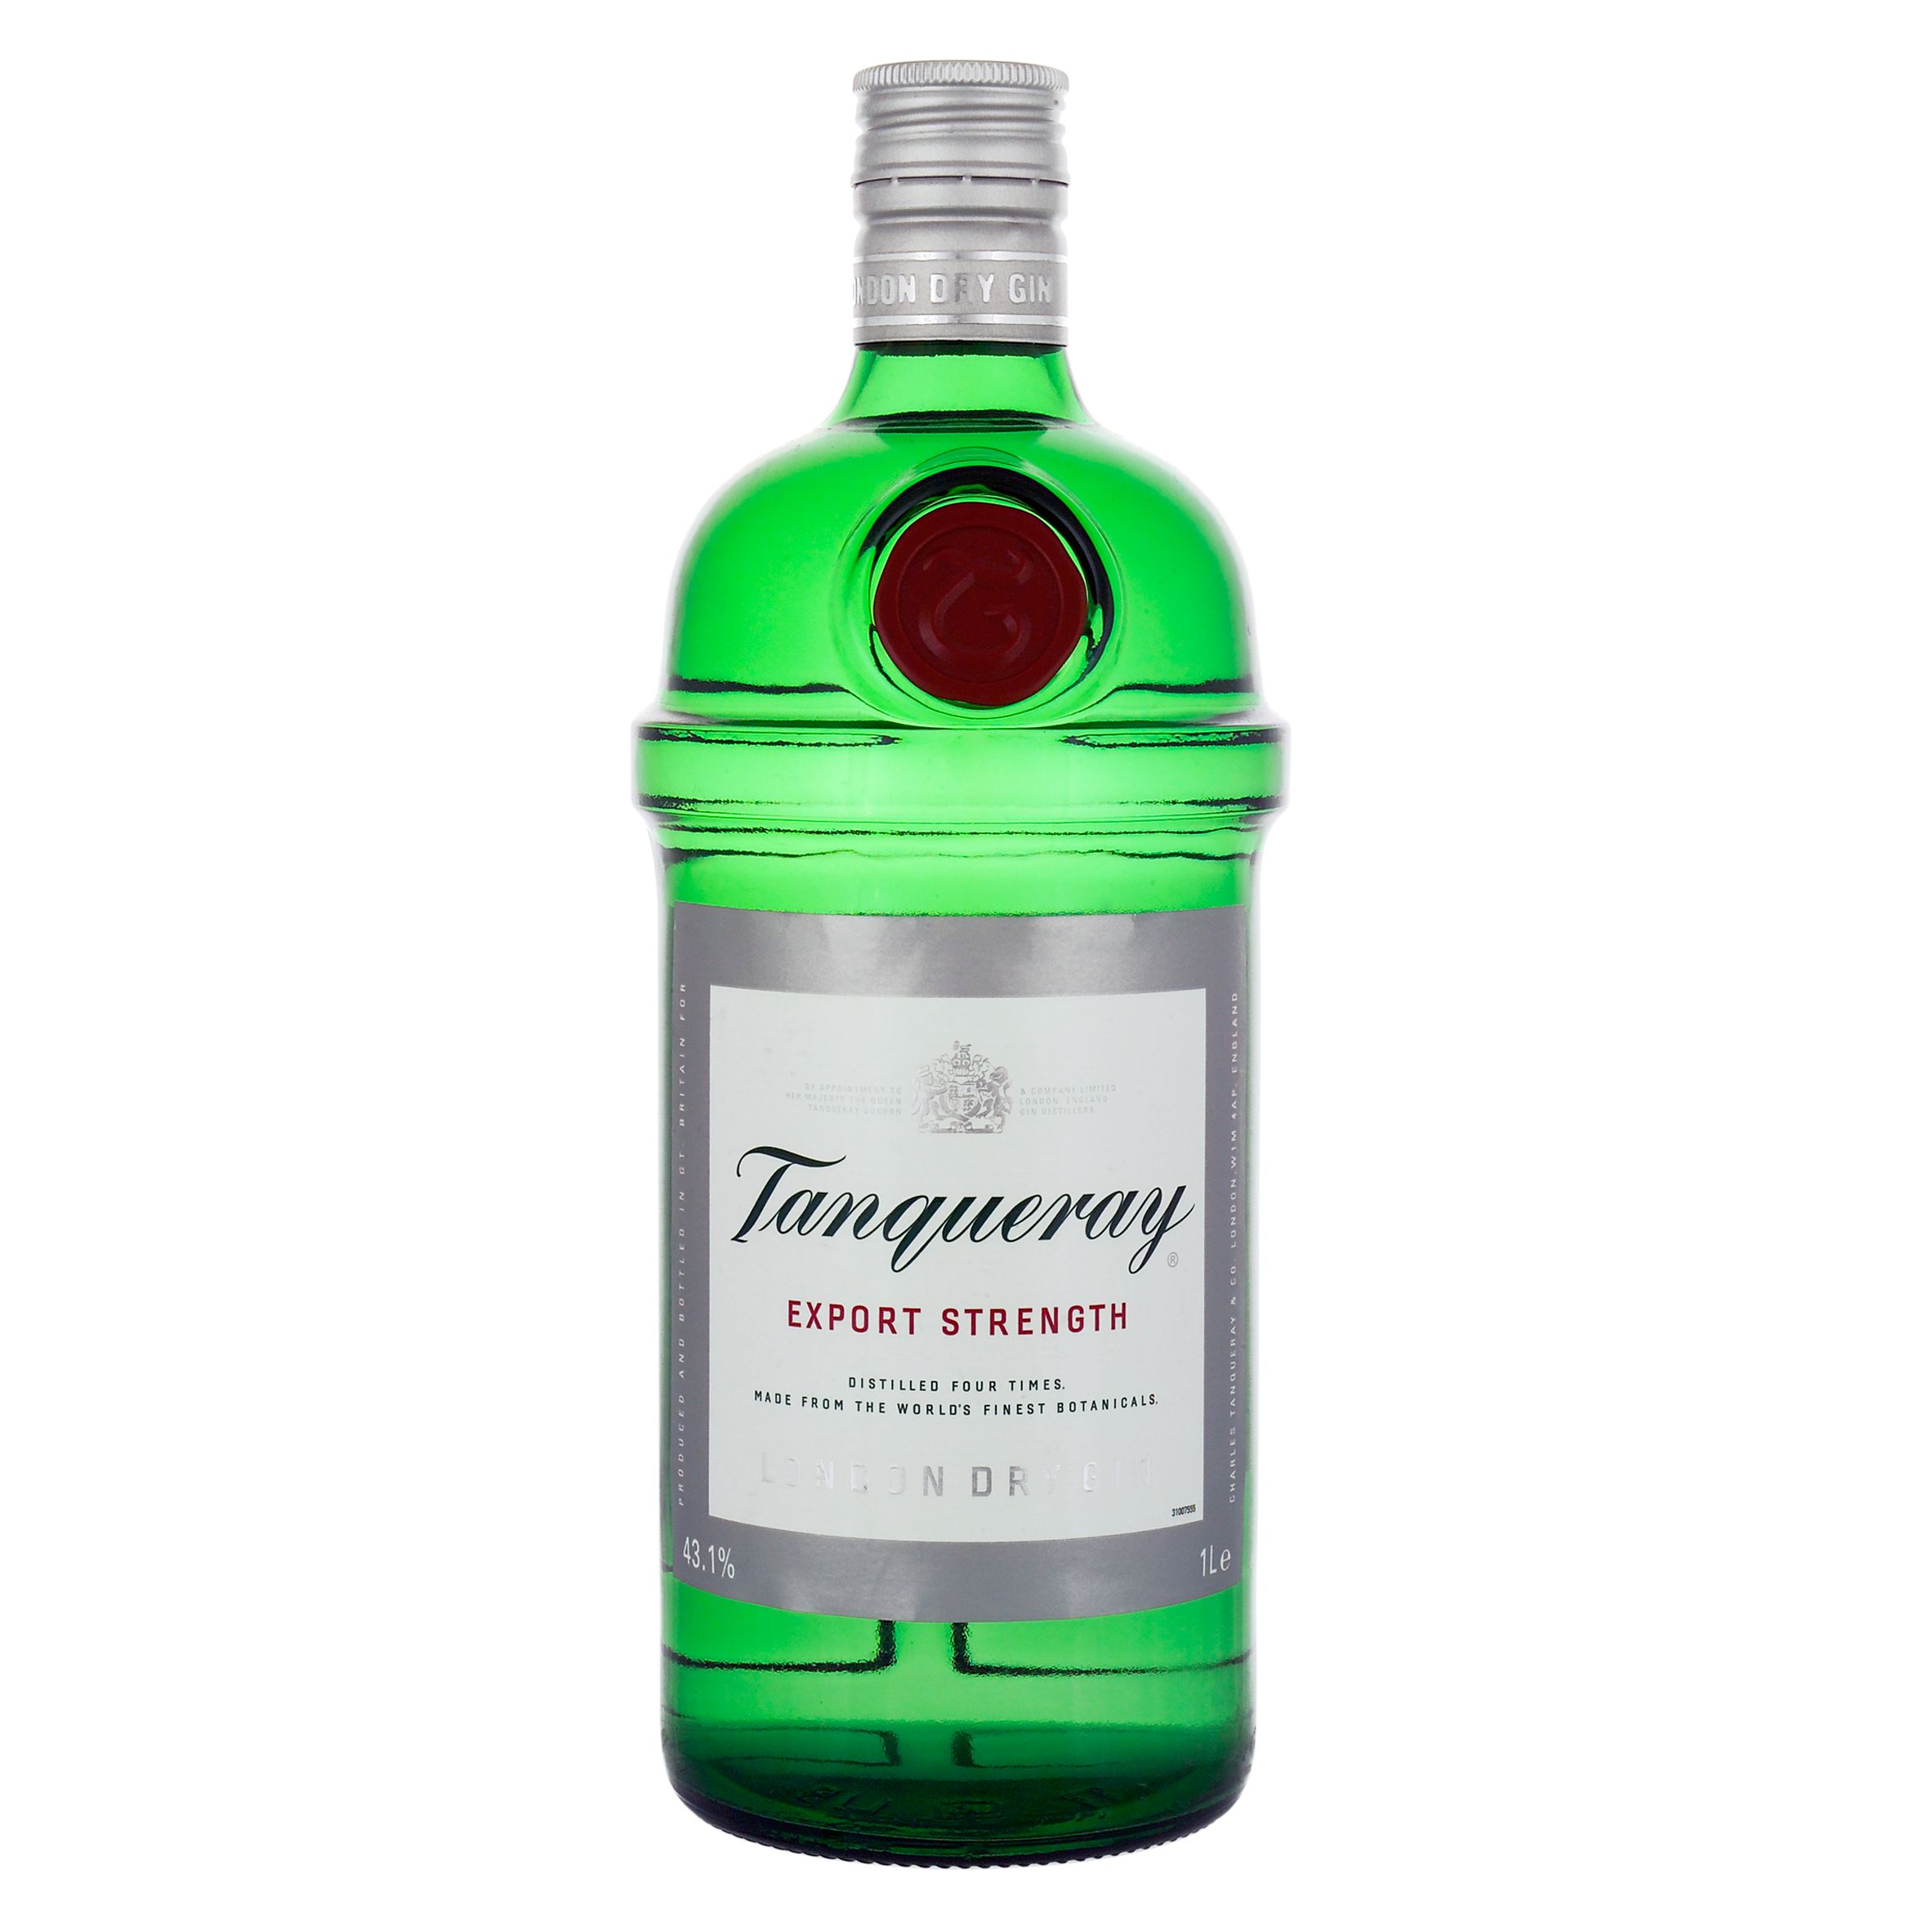 Tanqueray Gin, 1 Litre at John Lewis